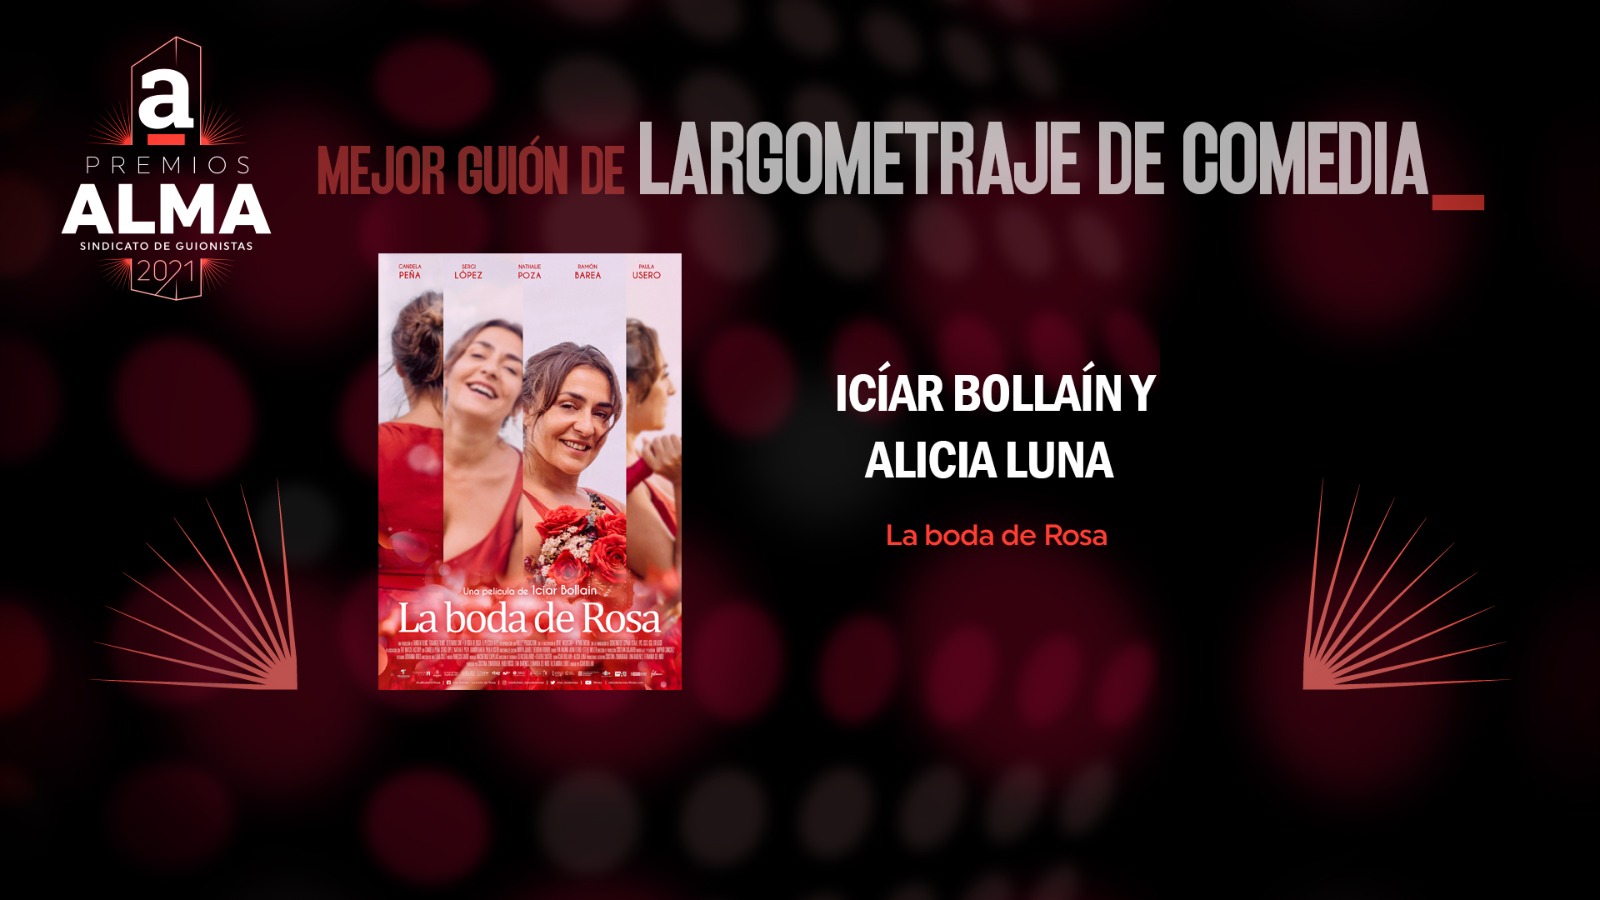 ¡Mejor Guion de largometraje de Comedia para Alicia Luna e Iciar Bollaín!